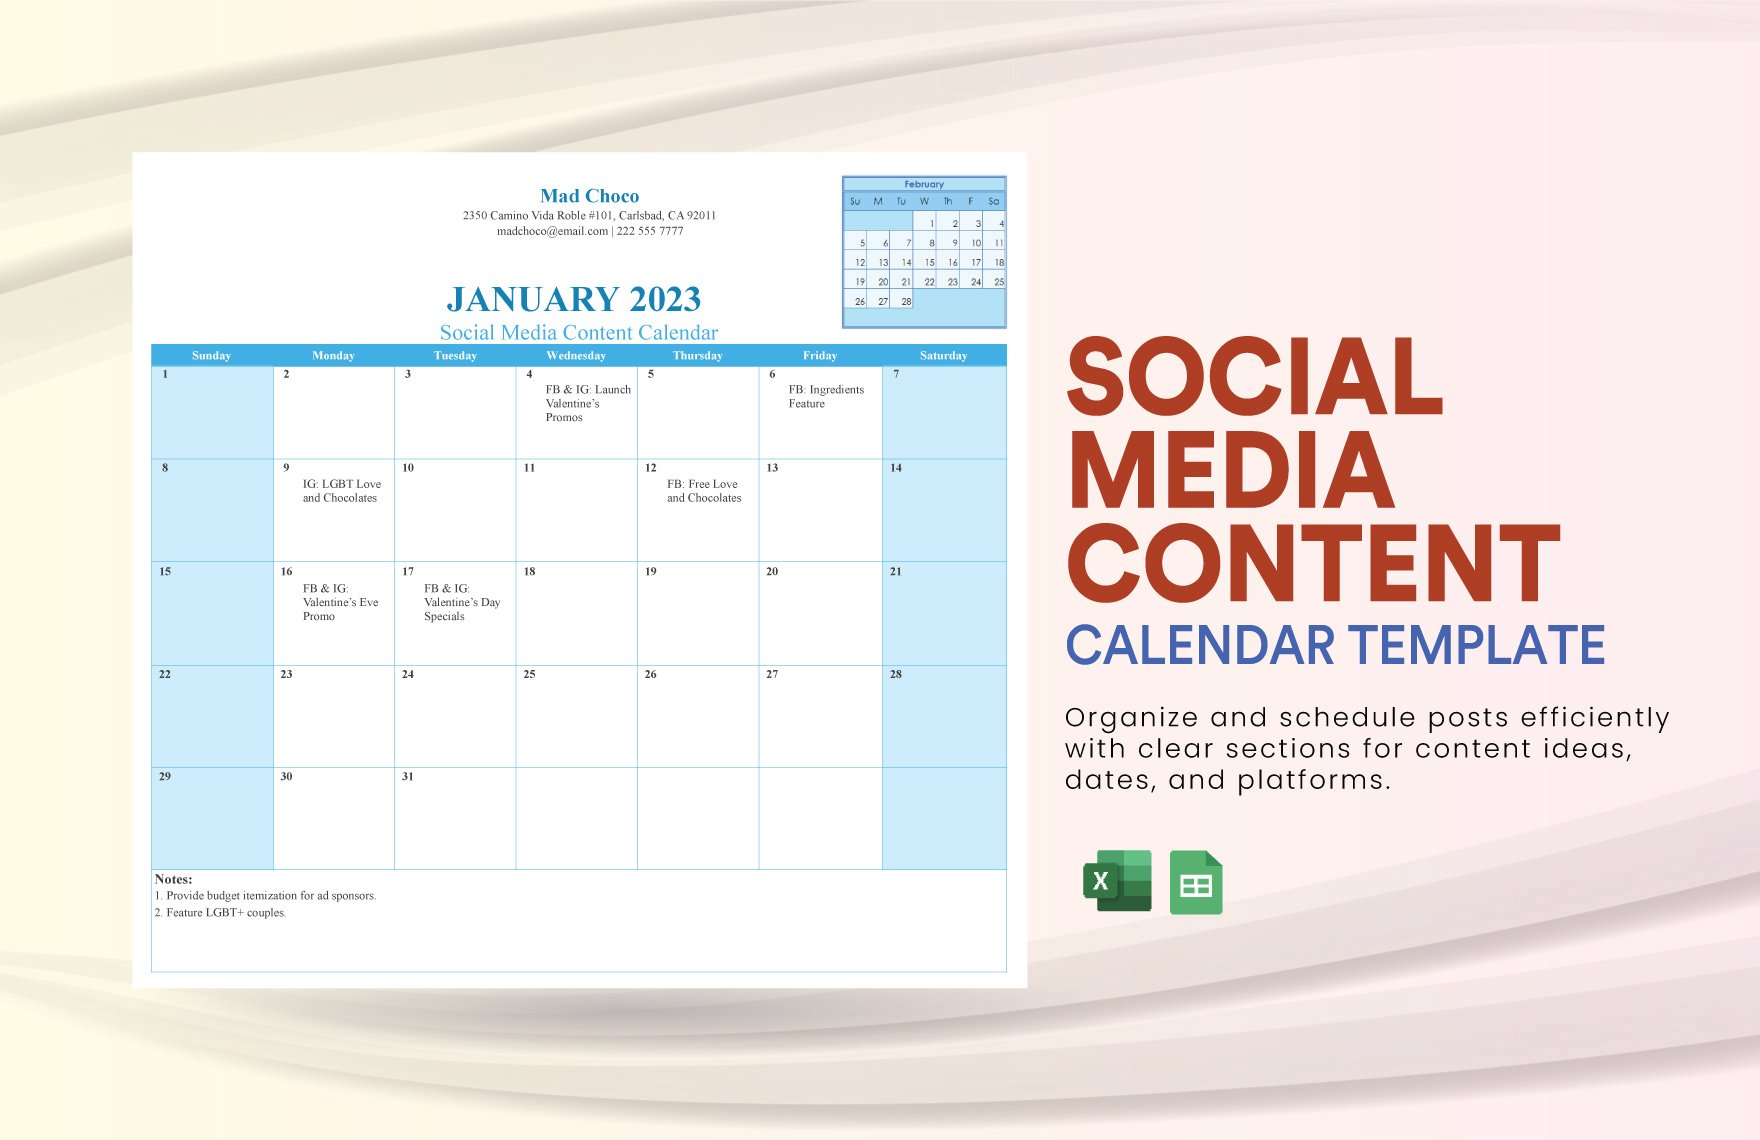 Social Media Content Calendar Template in Excel, Google Sheets